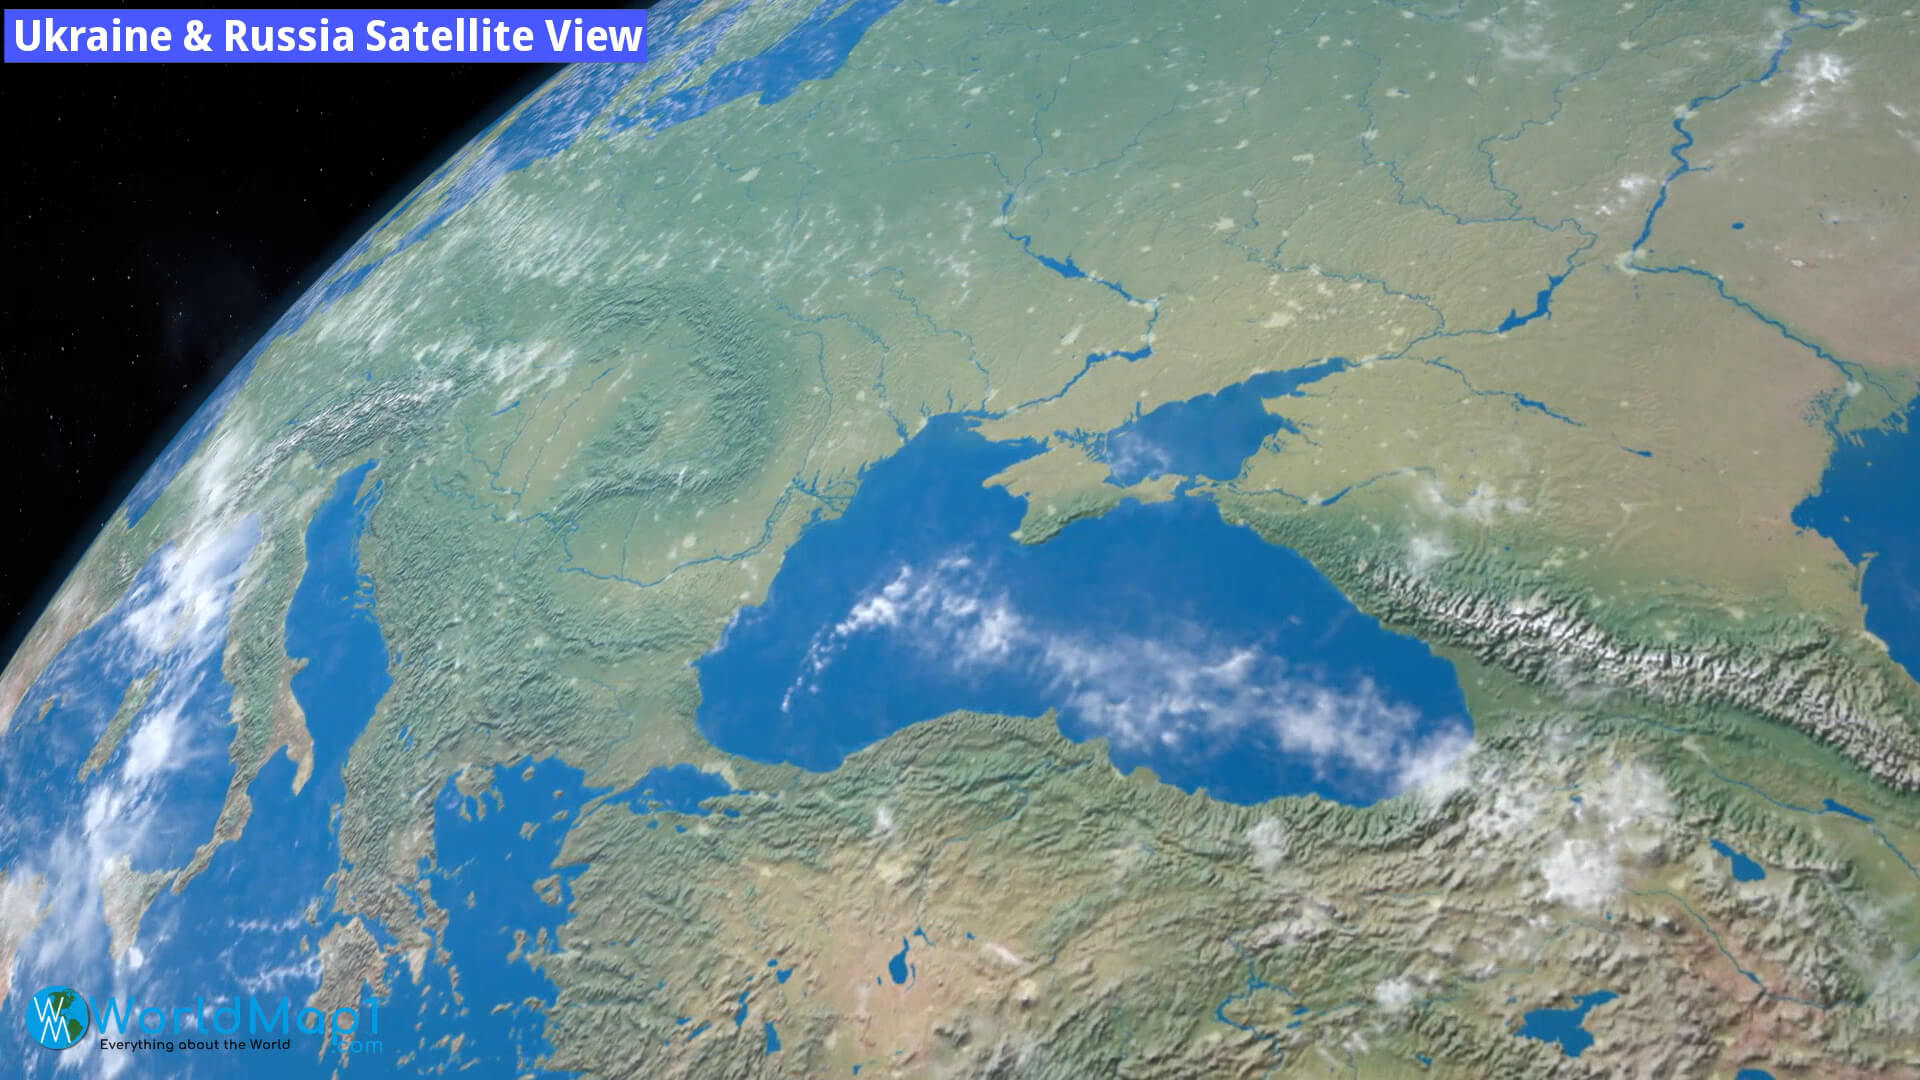 Ukraine and Russia Satellite View